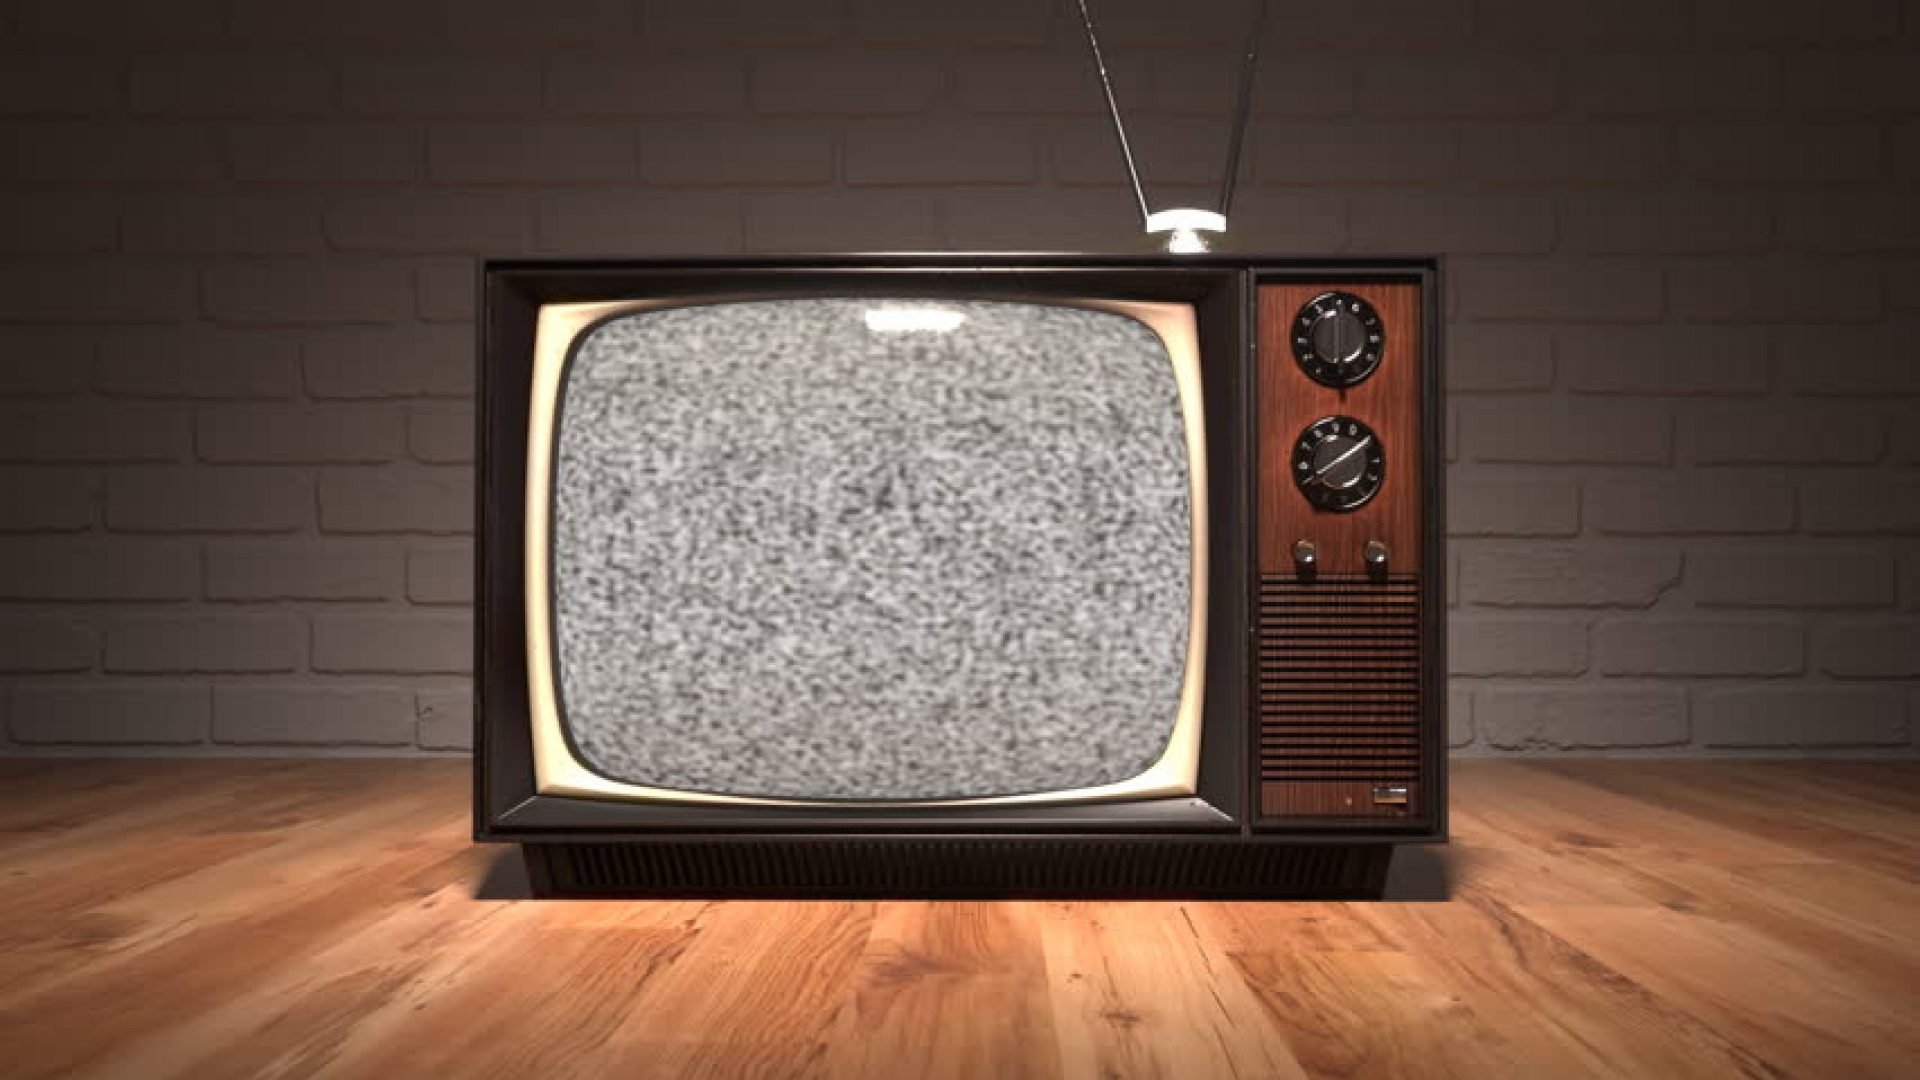 Tv. Телевизор Roadstar. Старый телевизор. Ретро телевизор. Винтажный телевизор.